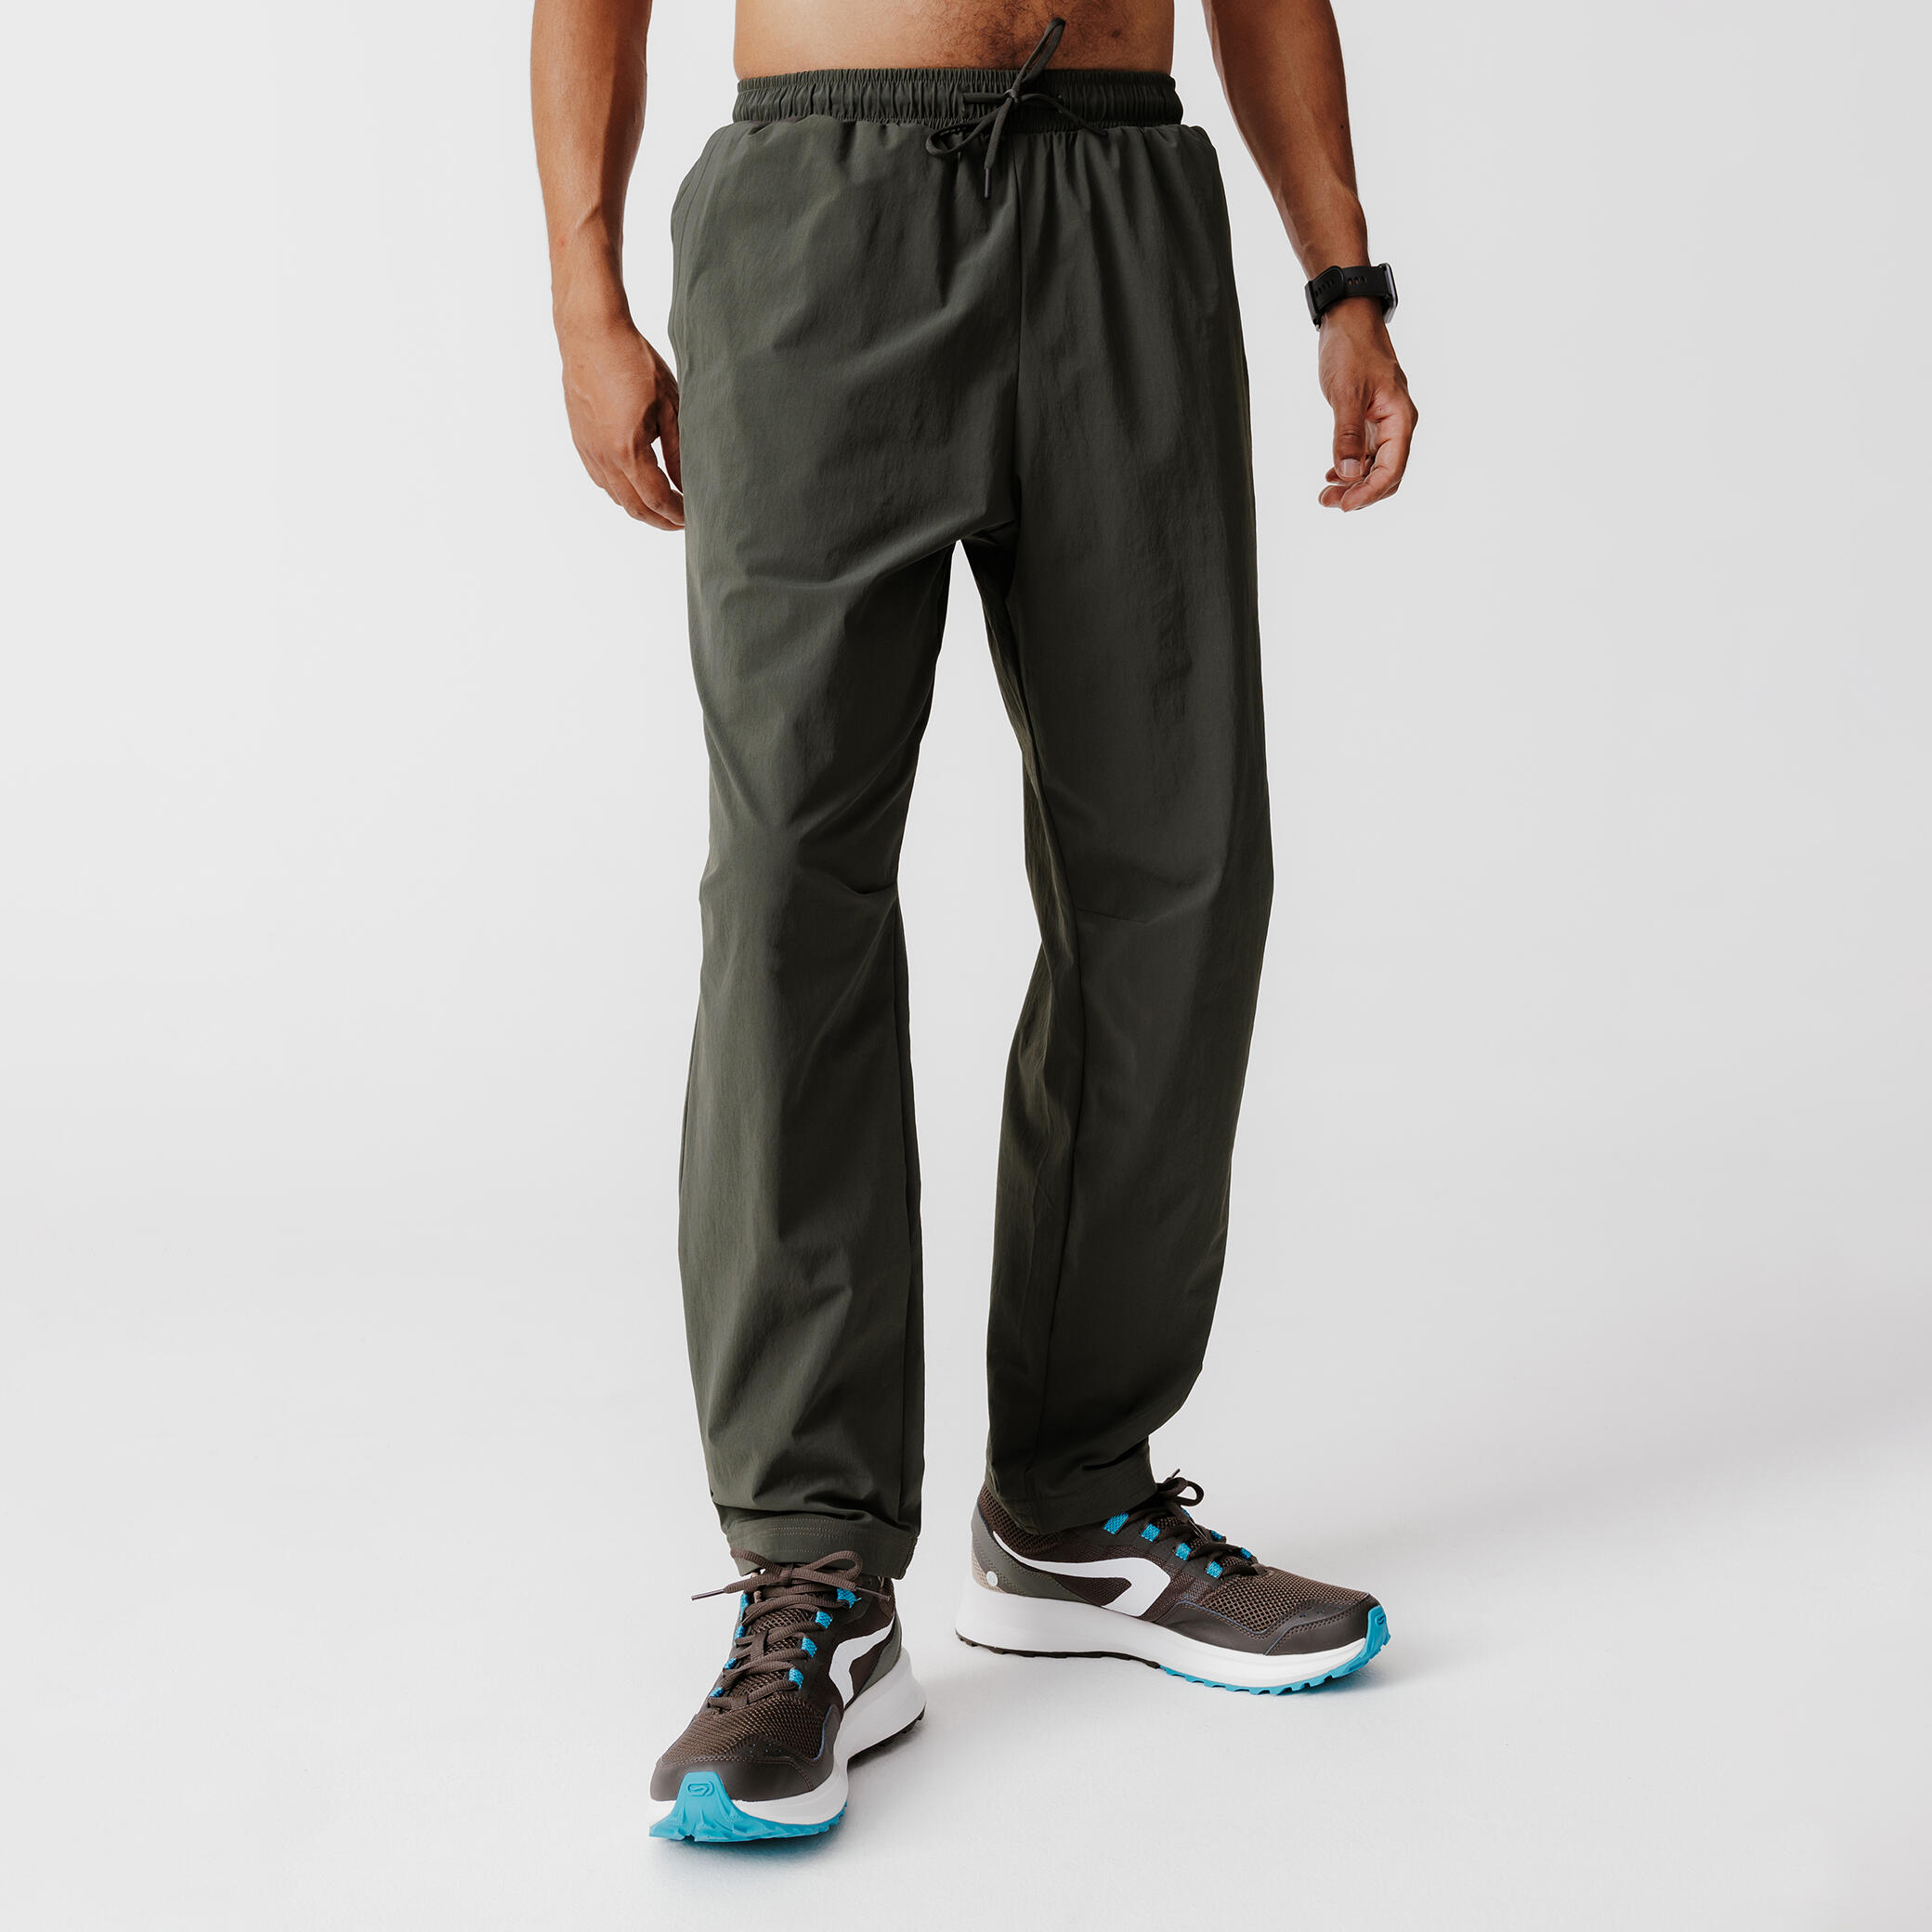 Men Dry 100 breathable running trousers - black